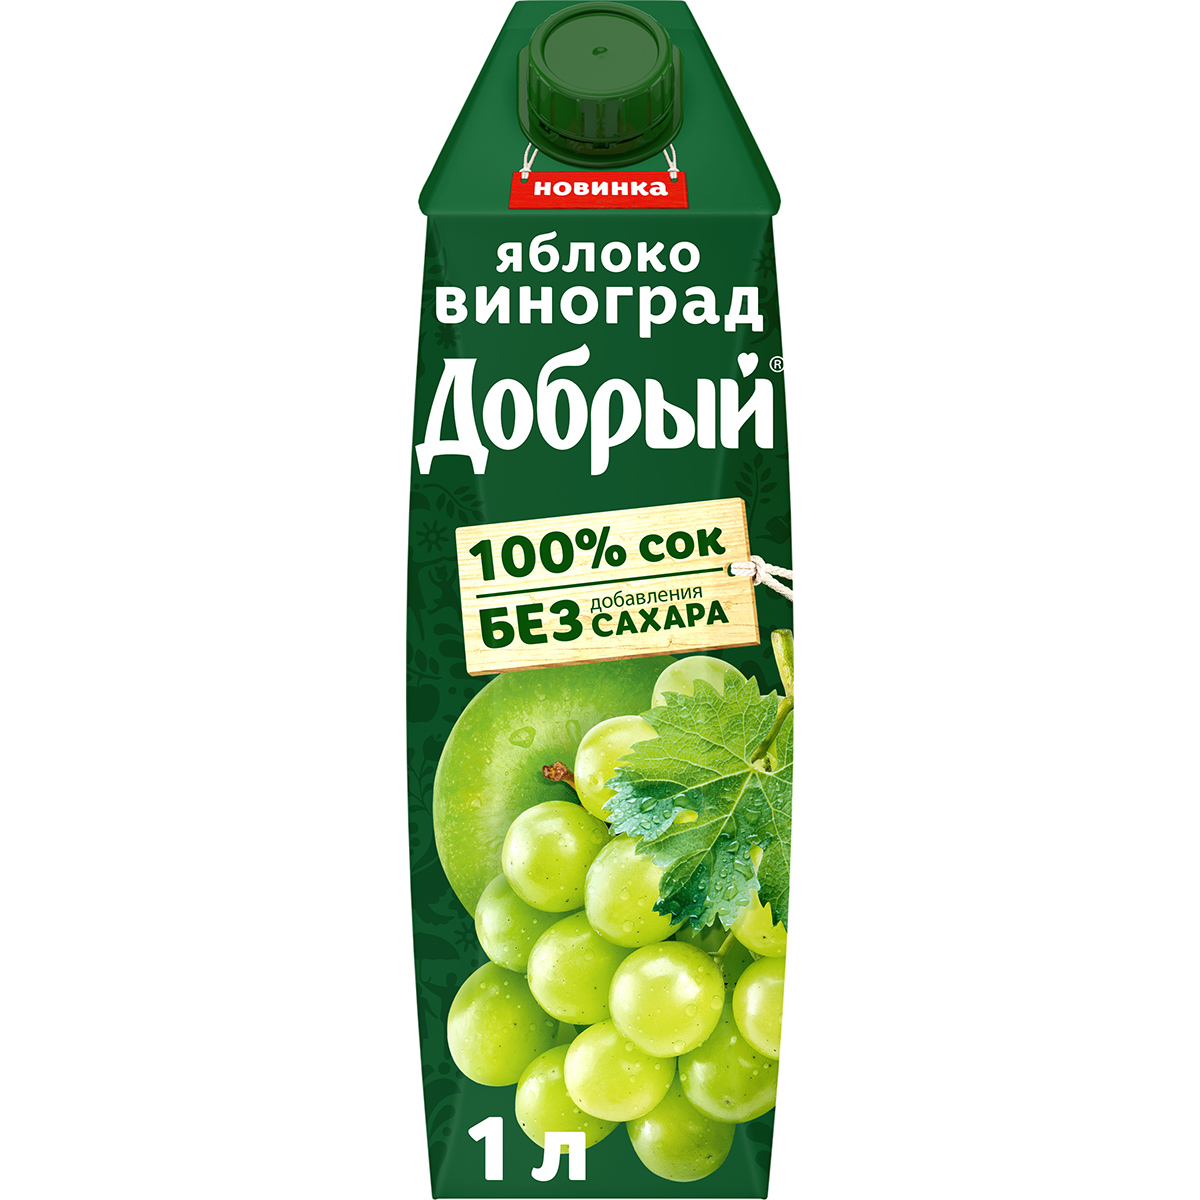 Сок Добрый Яблоко-виноград 1 л сок добрый яблоко 1 л